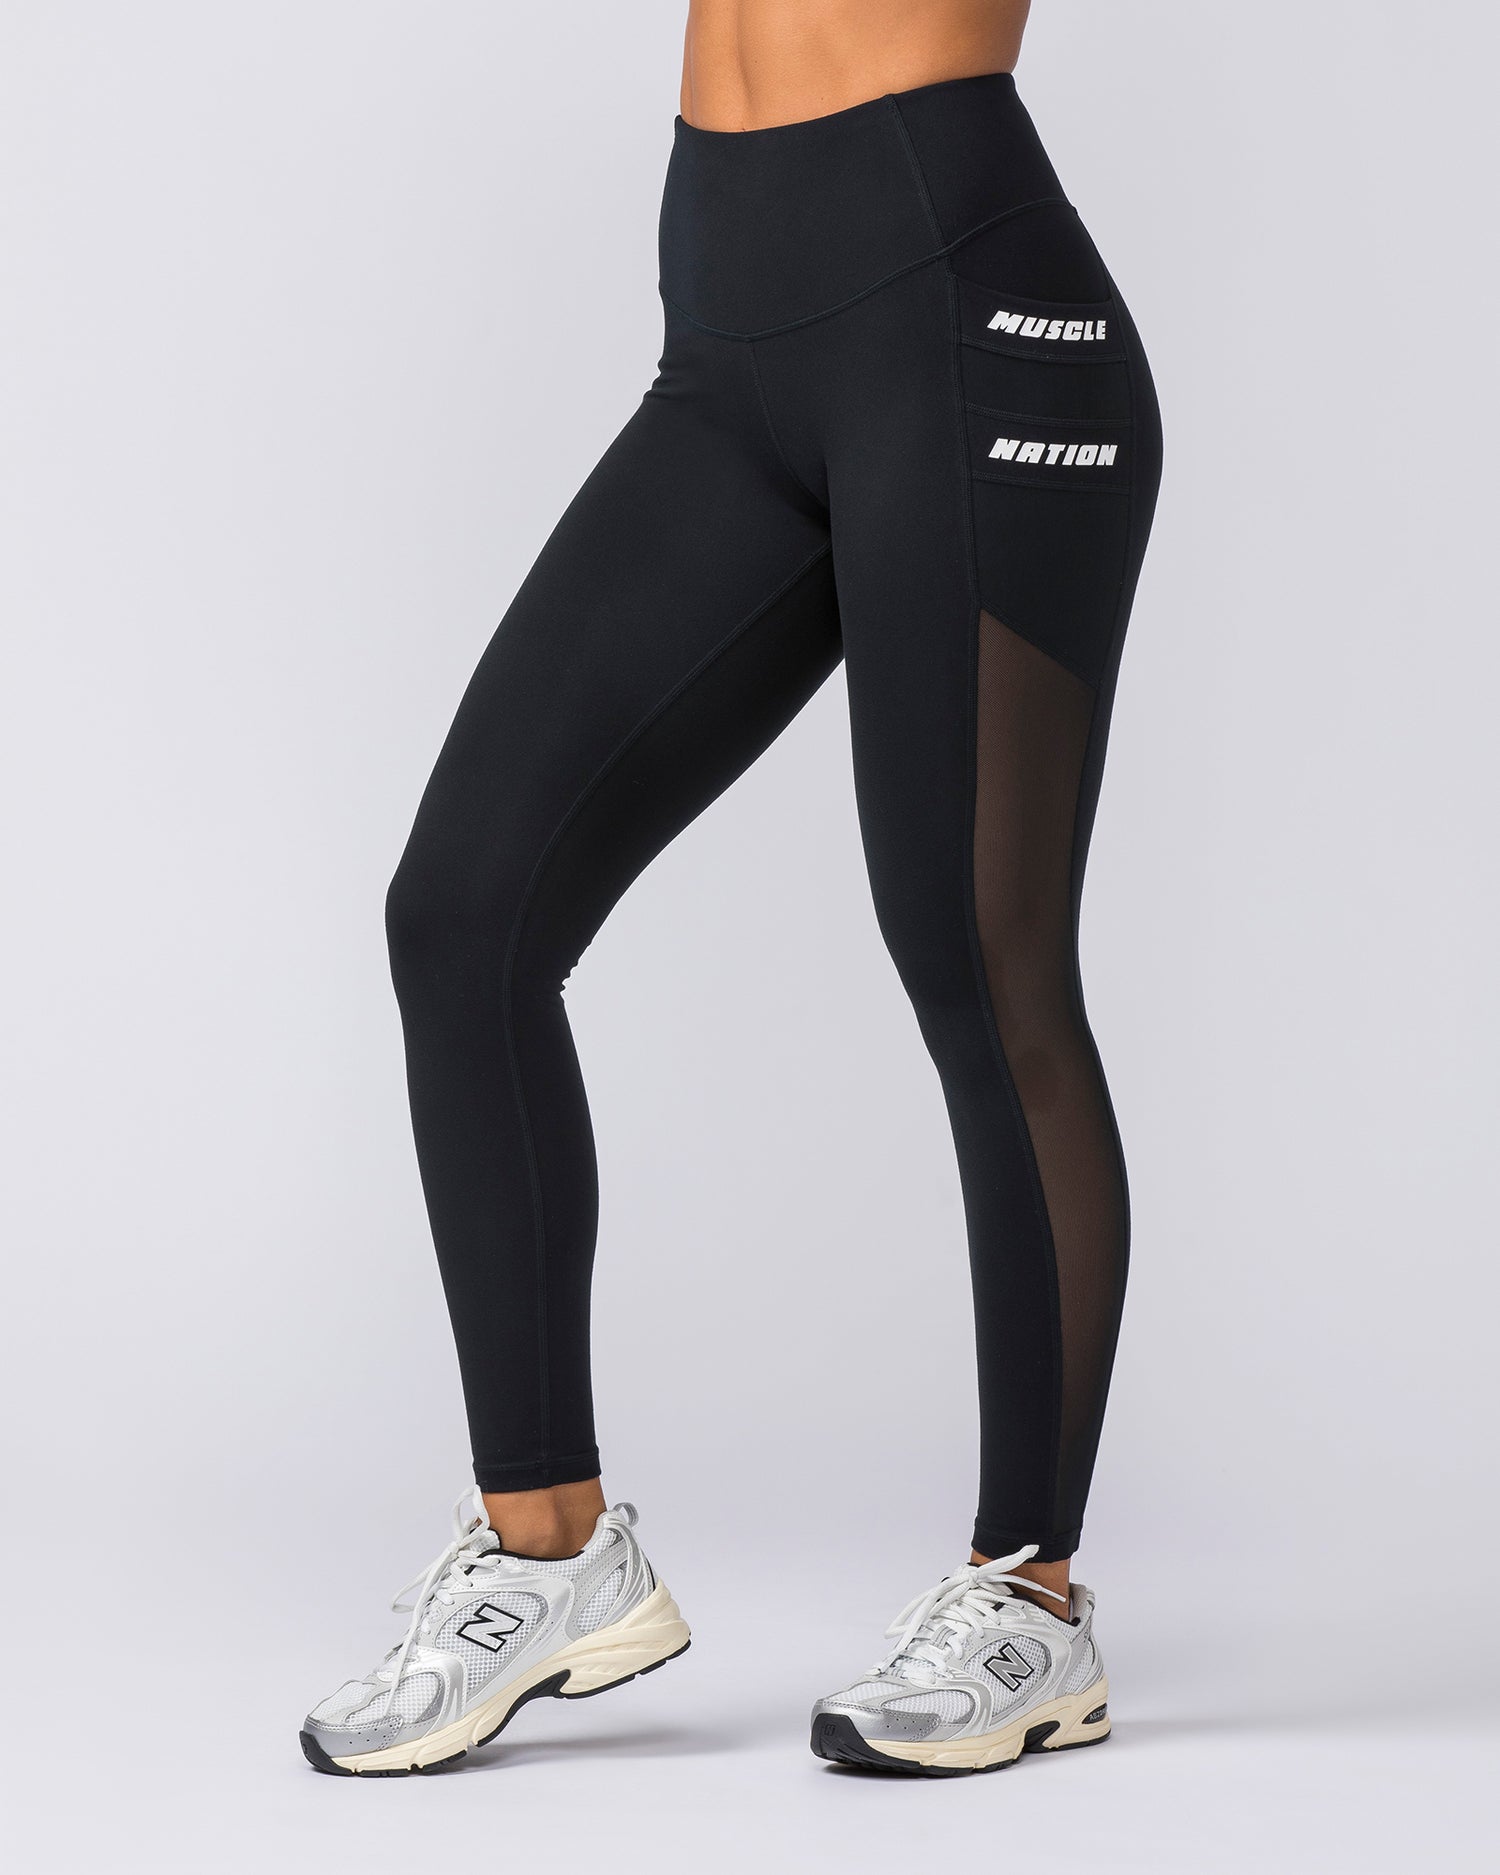 Amplify Legging - Black  Shop womens tops, Black leggings, How to